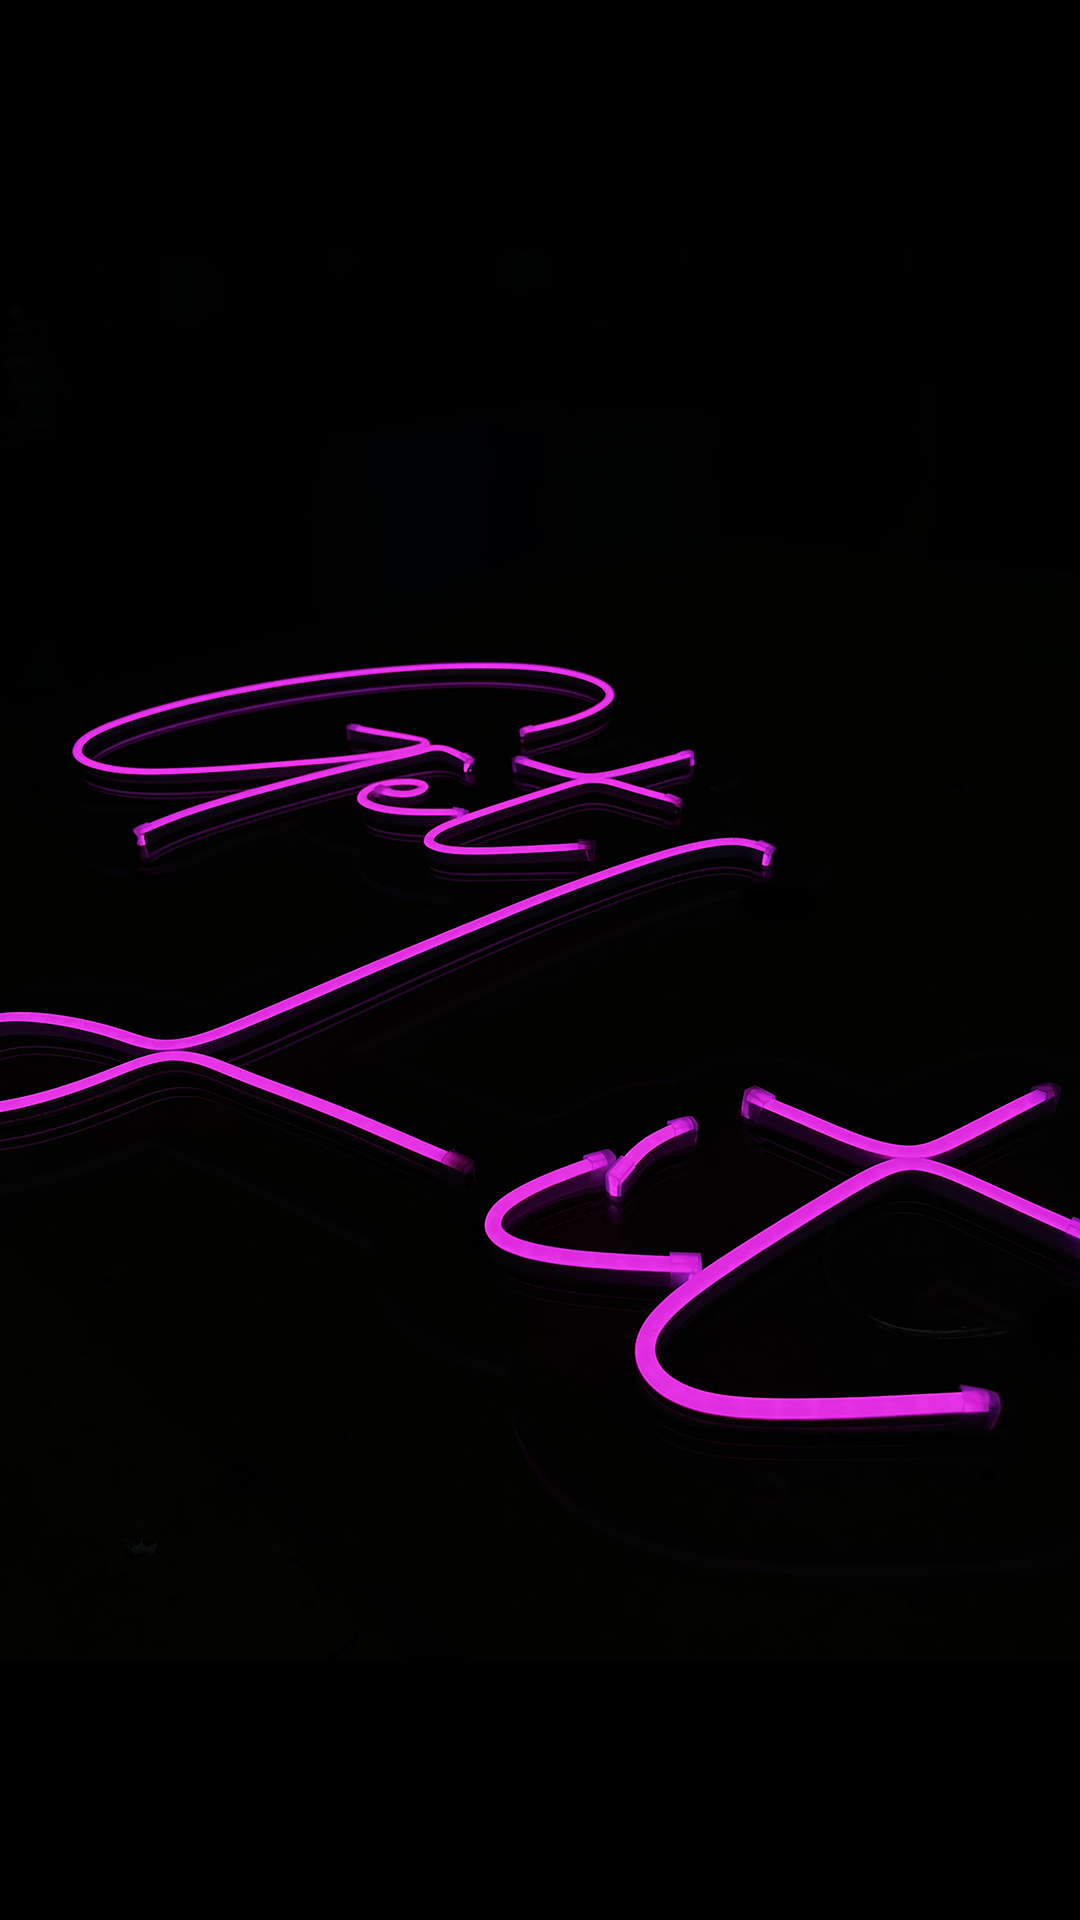 ellis-signs-custom-pink-neon-signs-newcastle-gateshead-north-east